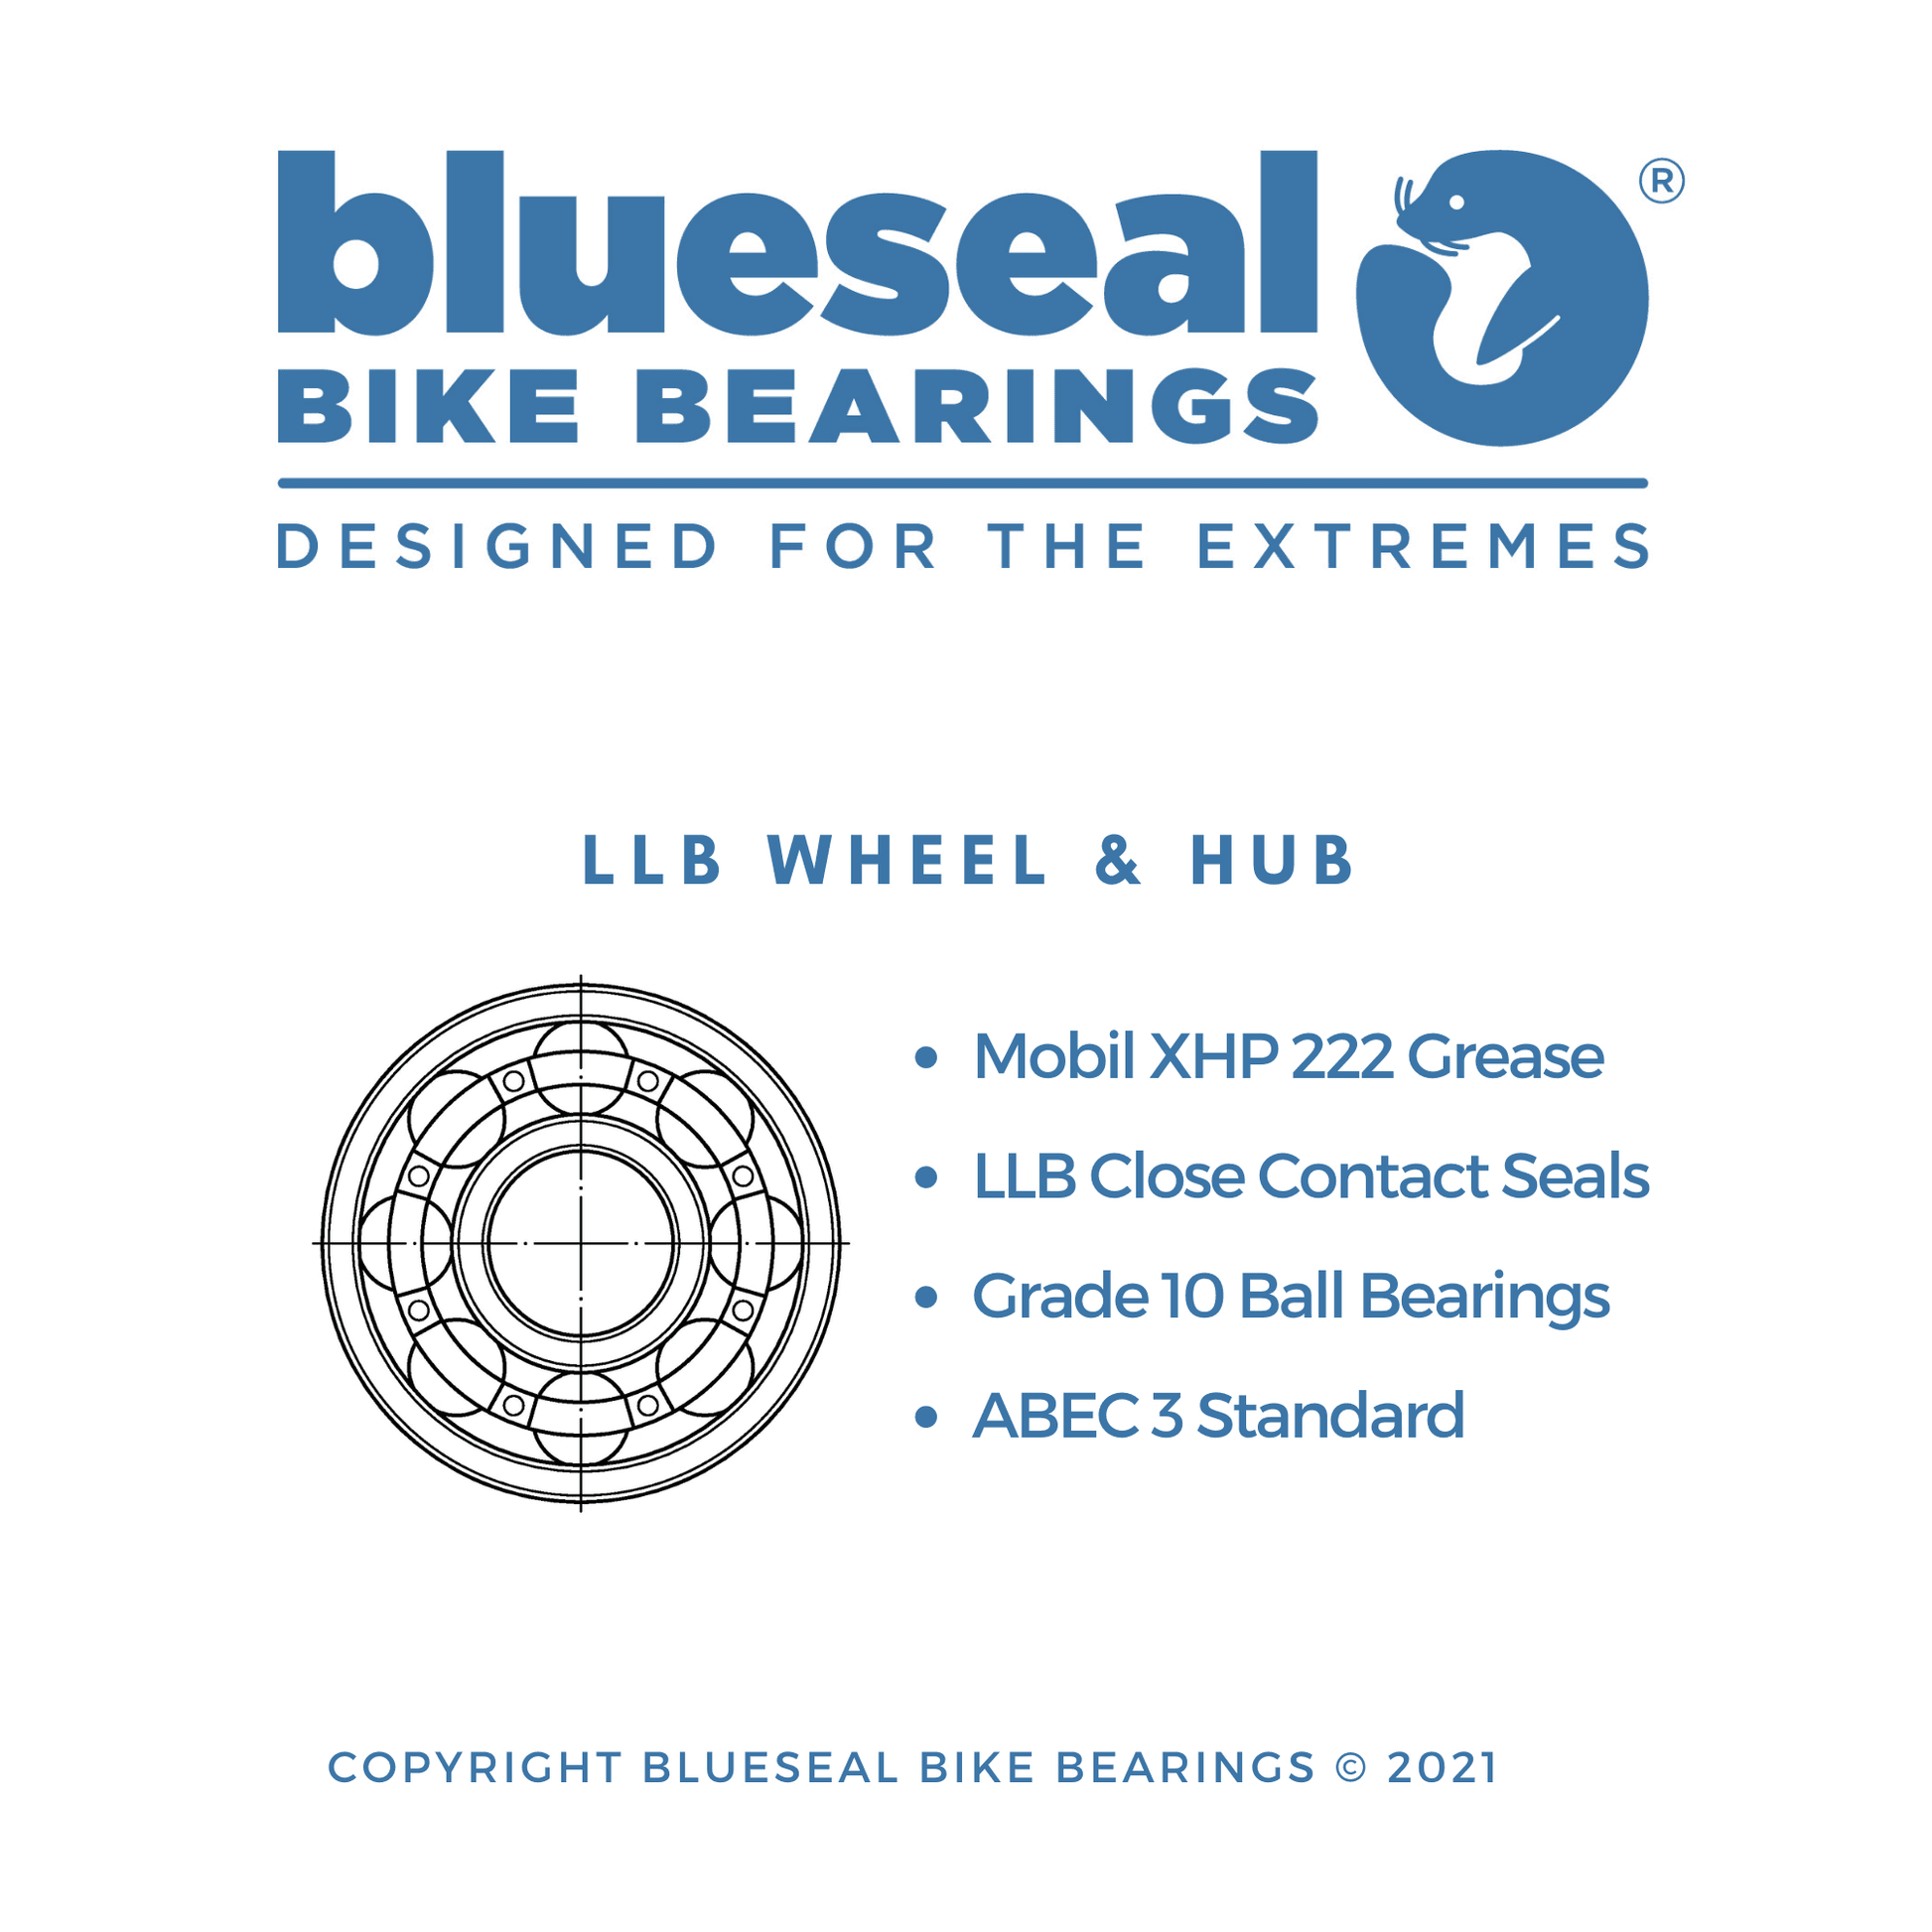 698 LLB 8 x 19 x 6mm ABEC 3 Bearing - Blueseal Bike Bearings™ - Trailvision - Mountain & Road Bike Bearings- Blueseal Bike Bearings™